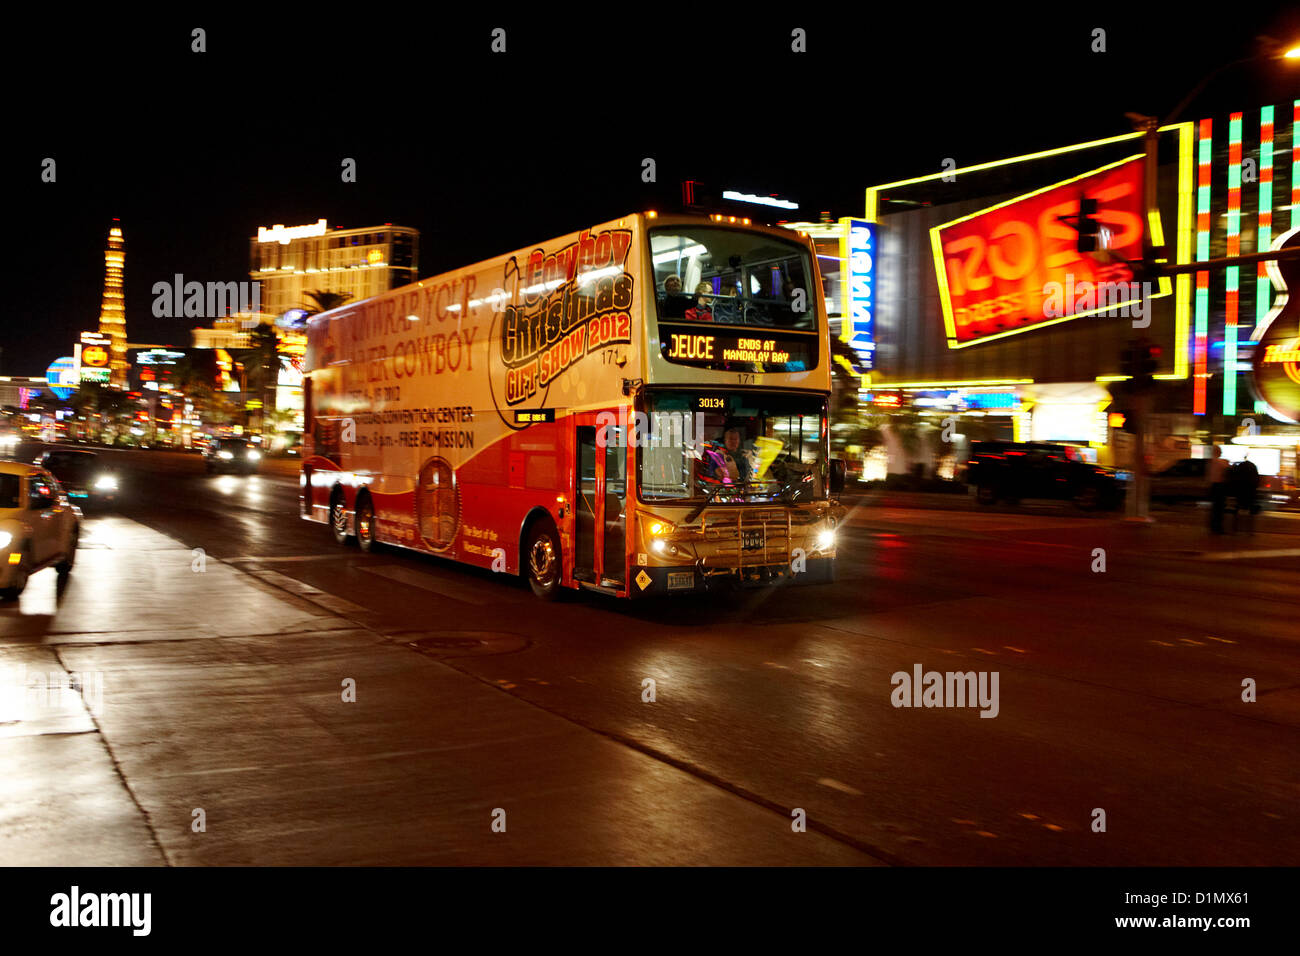 the deuce double deck bus on the Las Vegas strip Nevada USA. deliberate motion blur Stock Photo